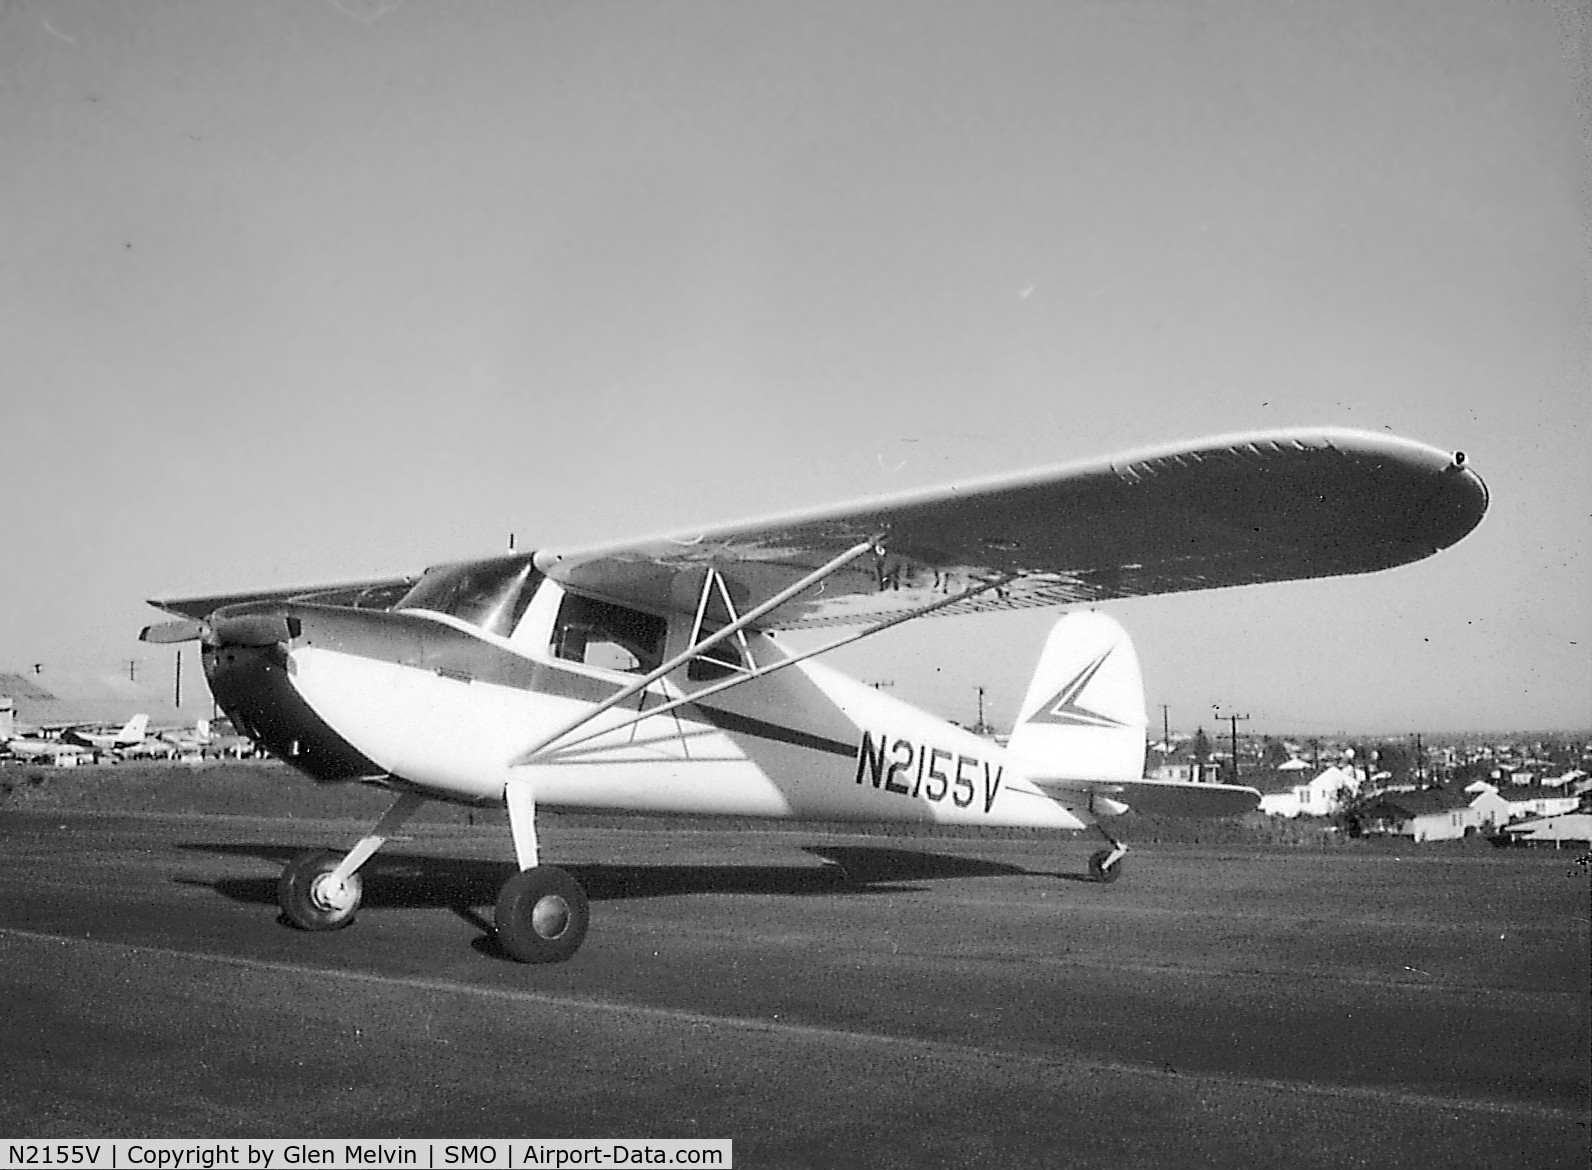 N2155V, Hy-Tek Hurricane STDW/503/Hauler C/N UL4837761, 2155V in 1960's - Santa Monica Airport, CA